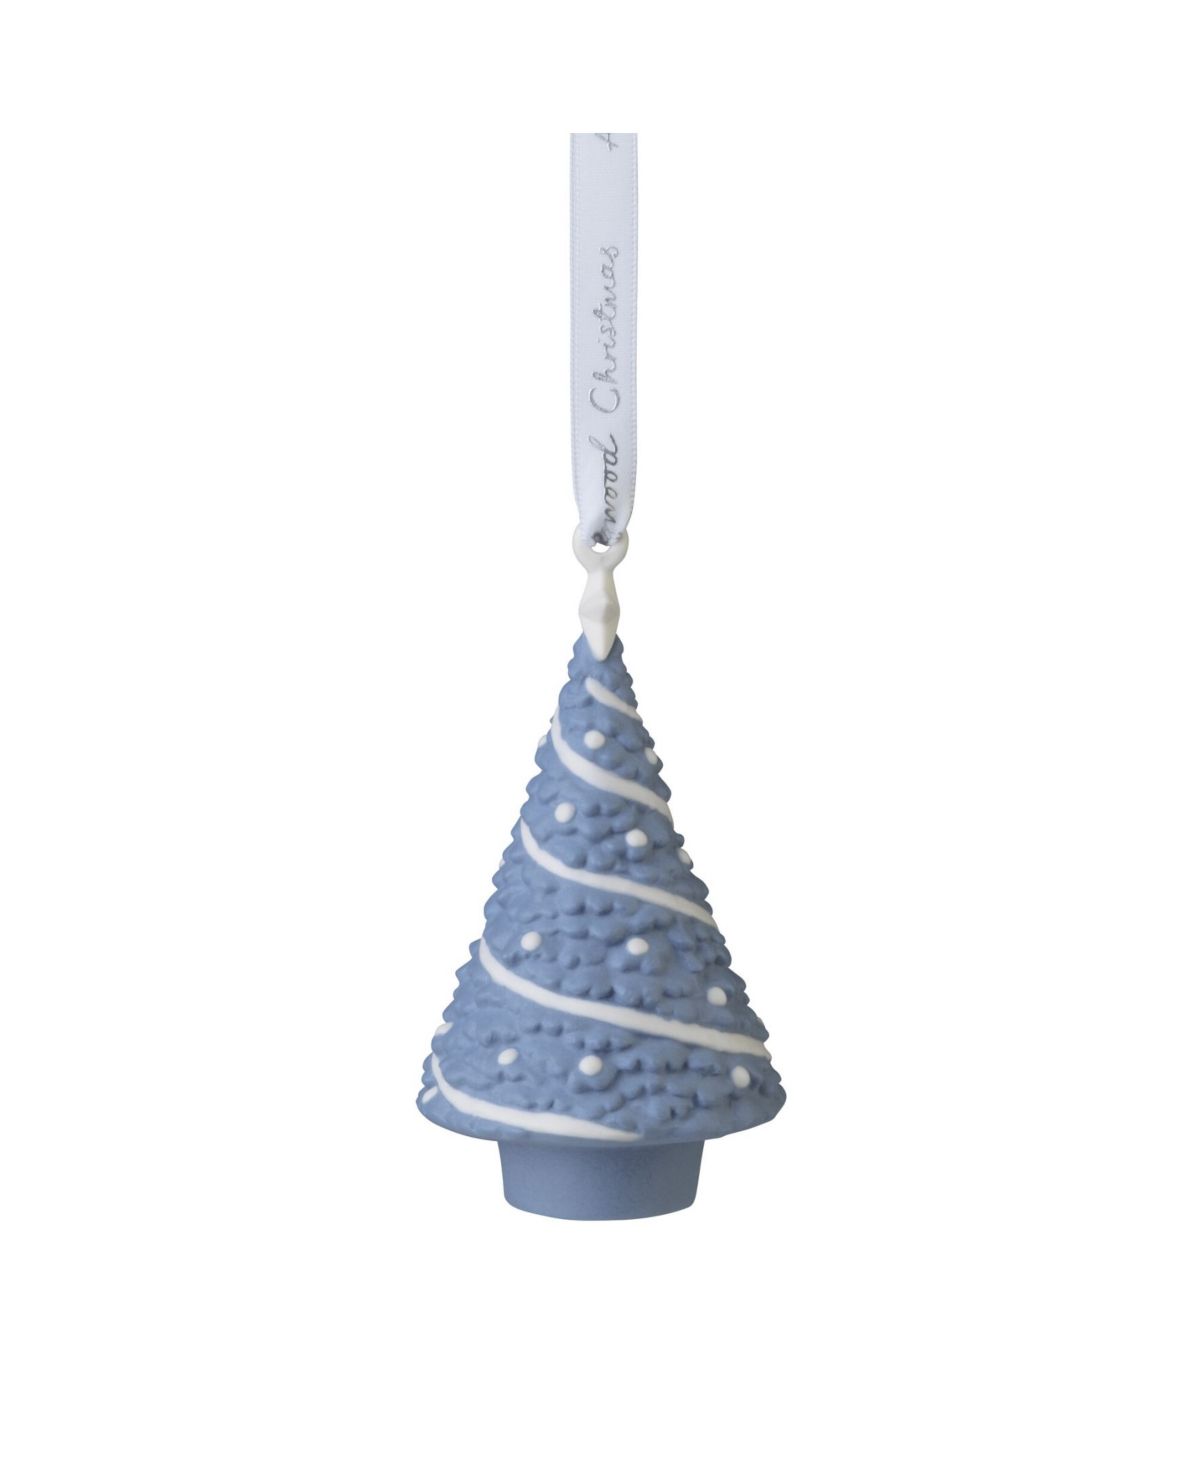 Wedgwood Figural Christmas Tree Ornament | Macys (US)